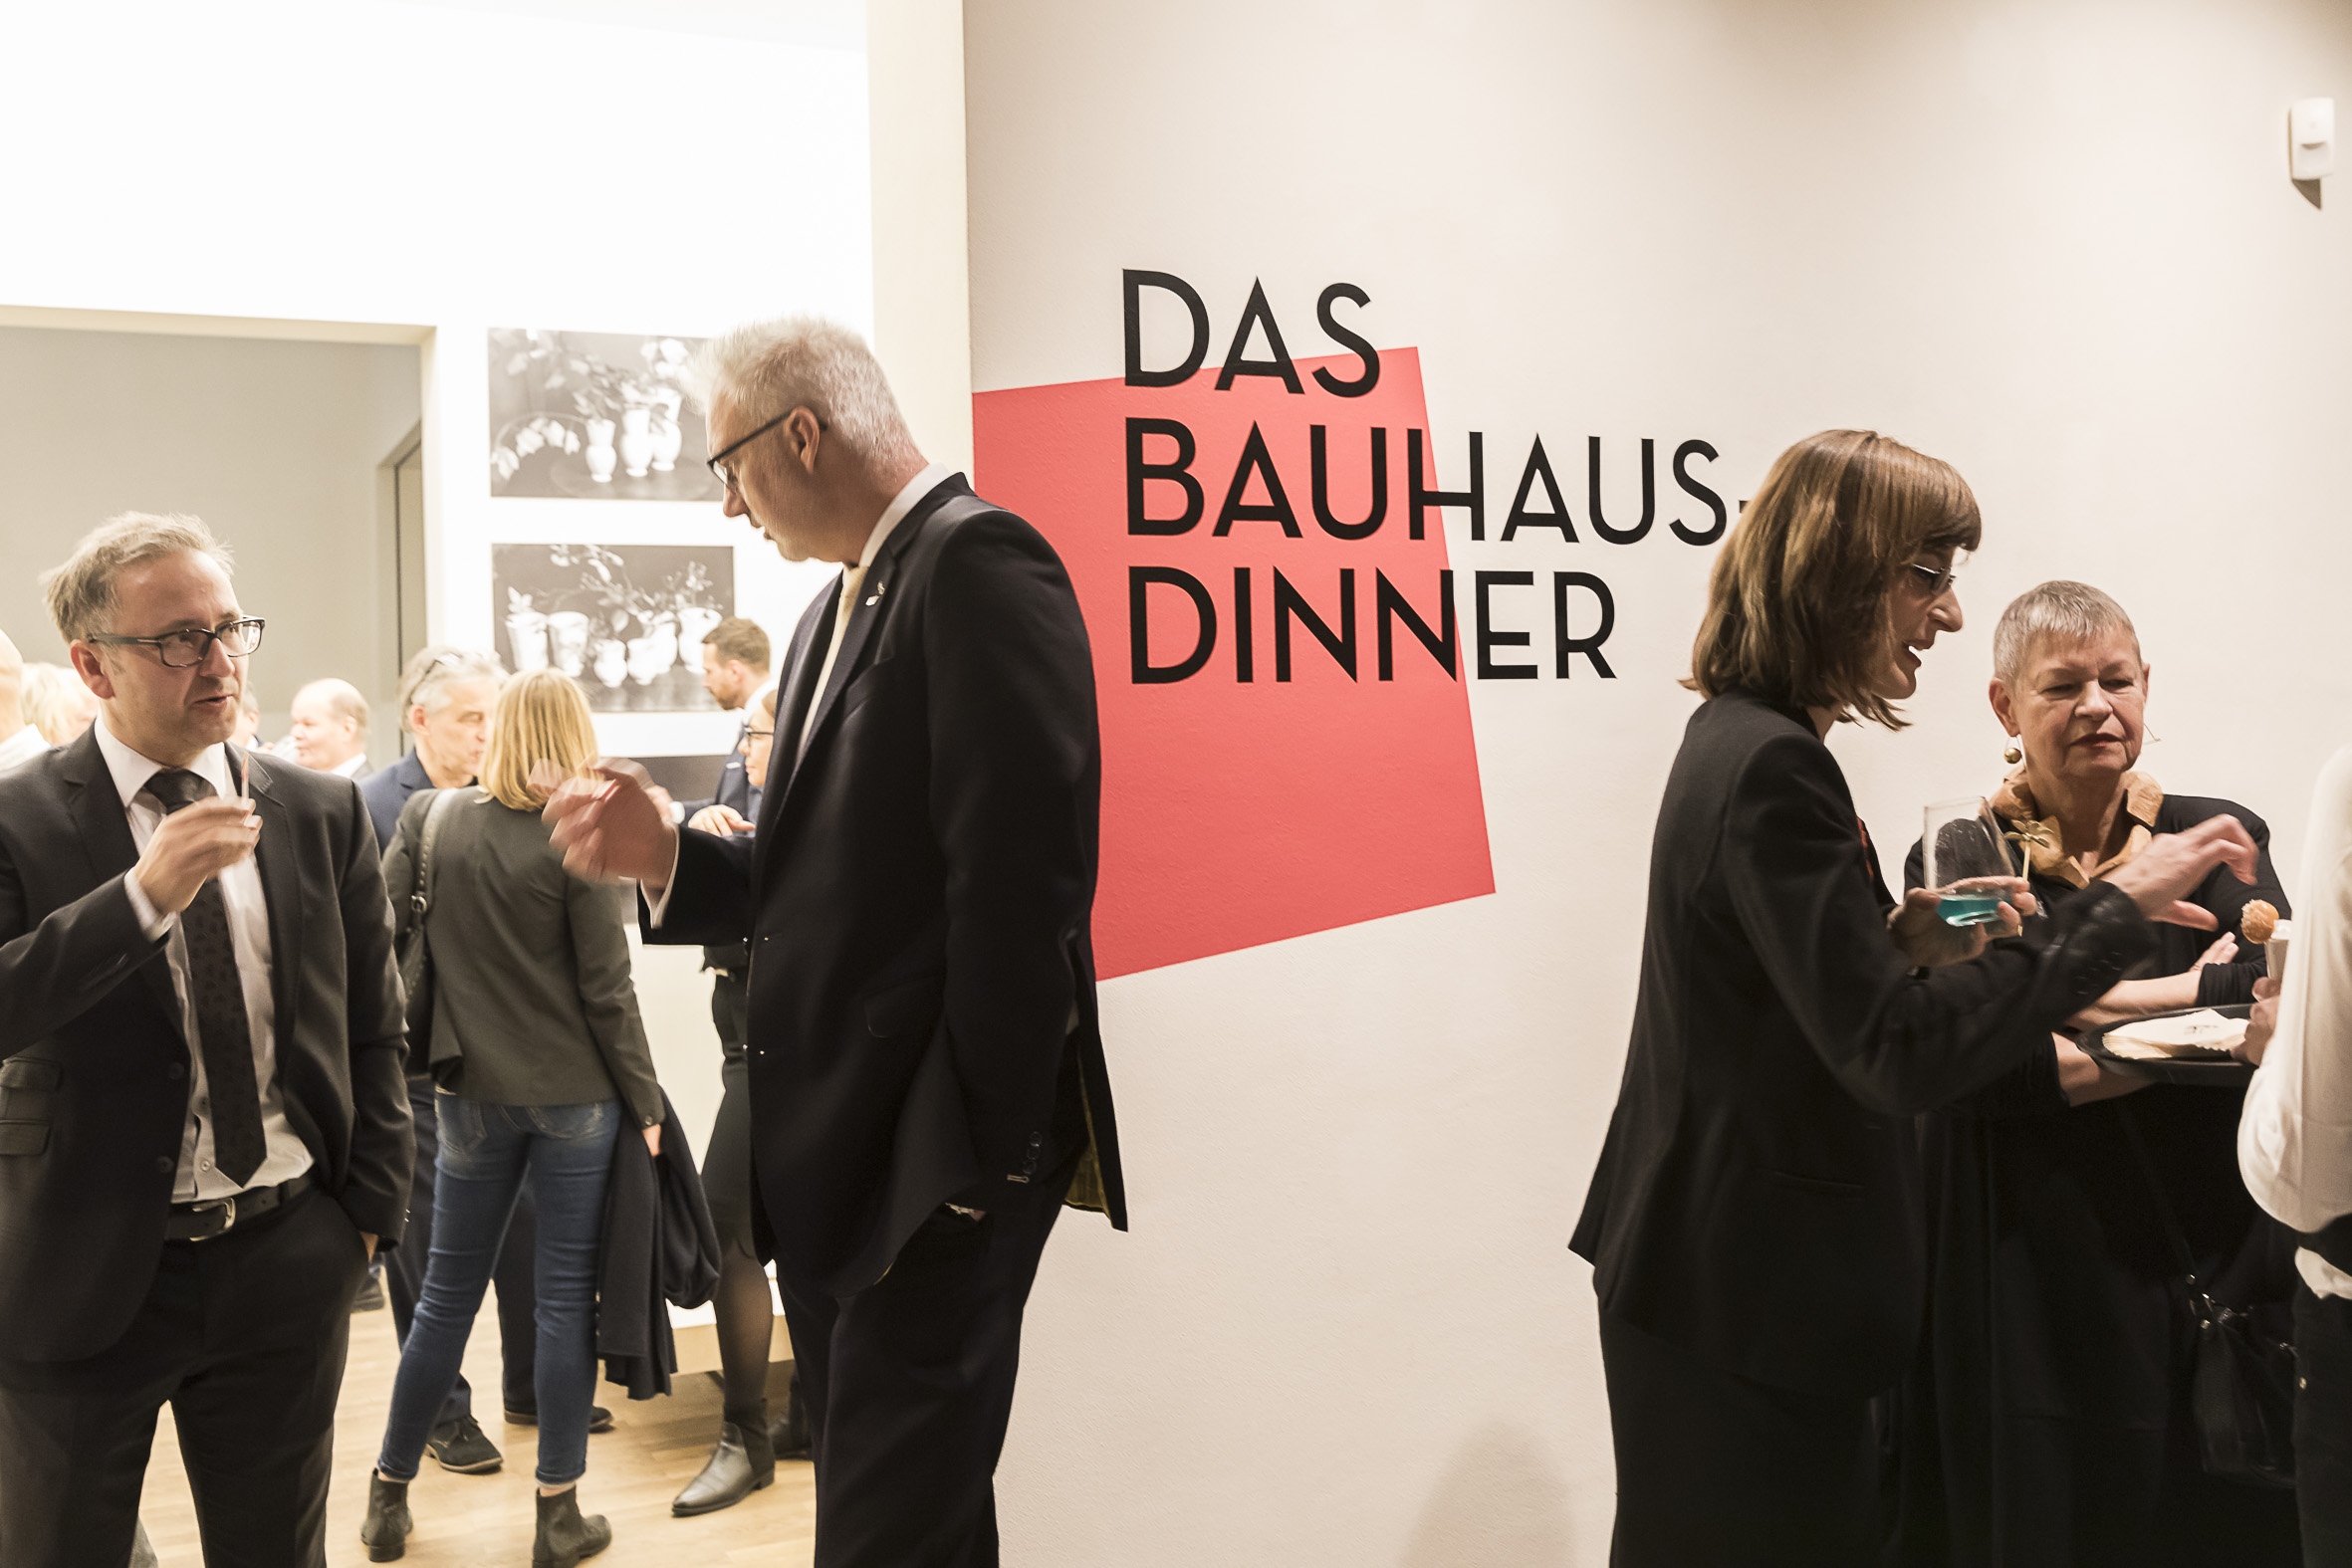 Bauhaus Dinner (c) Matthias Ritzmann